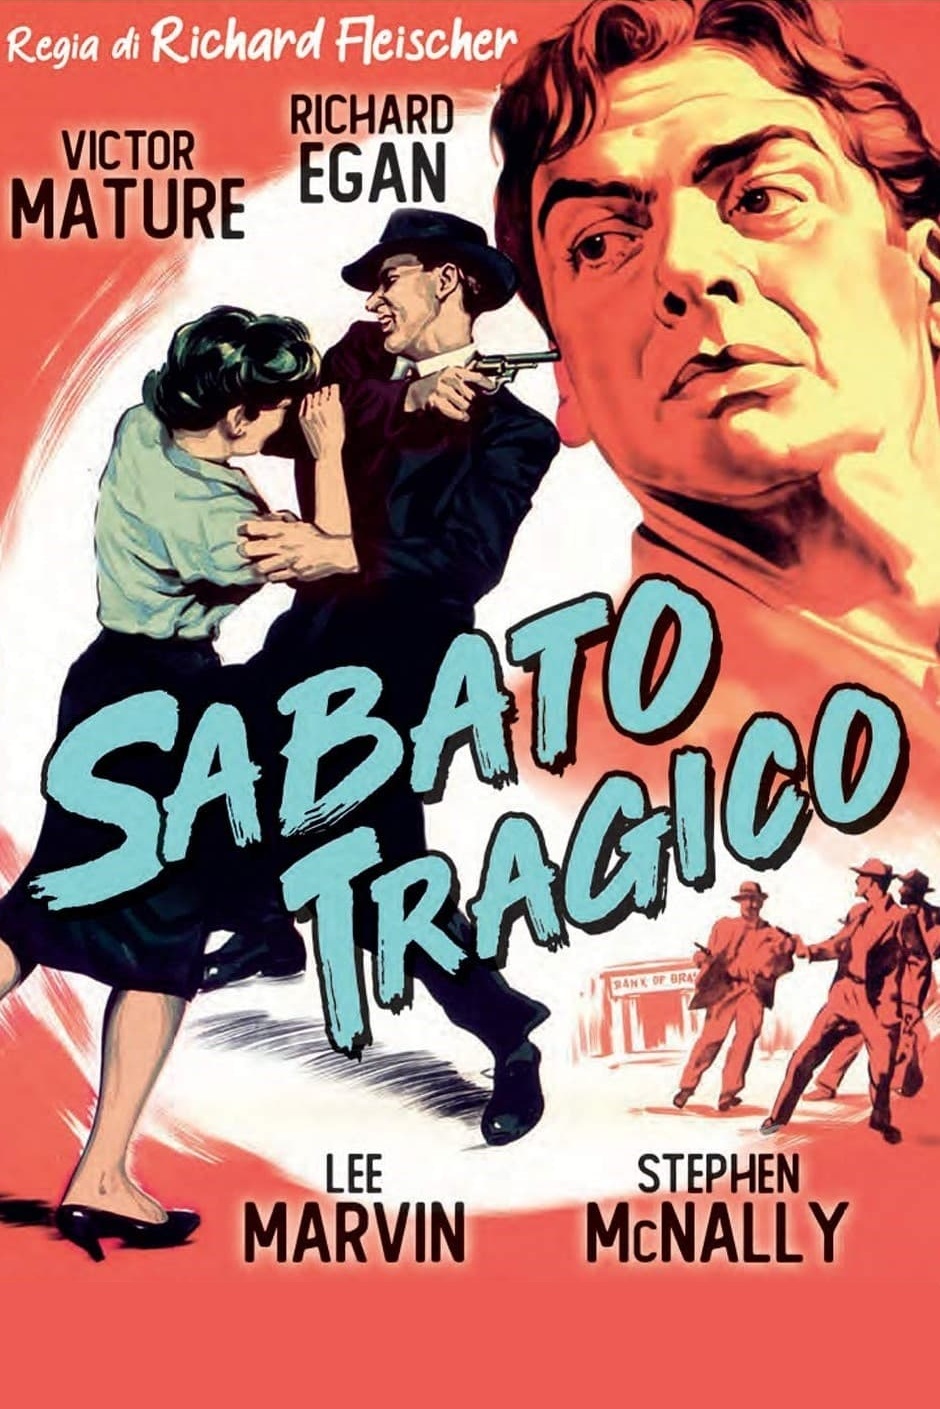 Sabato tragico [HD] (1955)